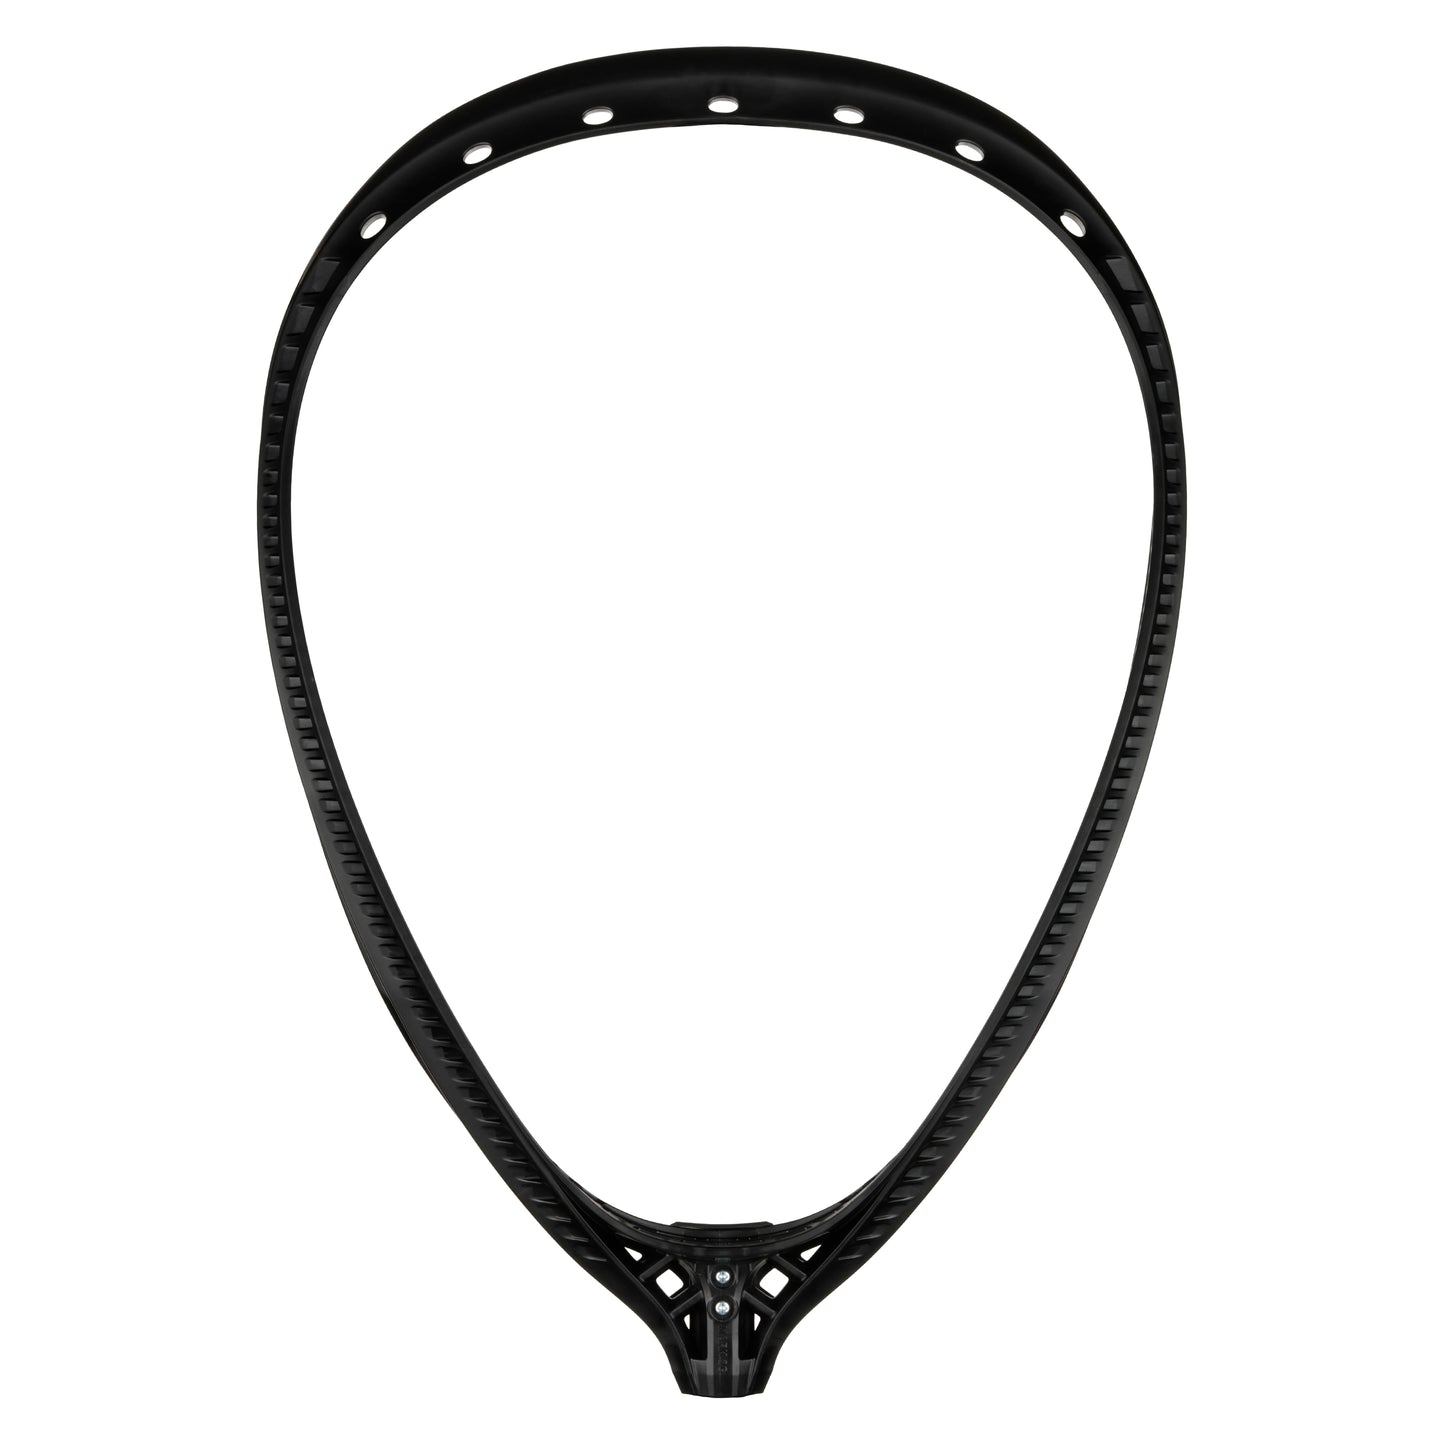 StringKing Mark 2G Goalie Lacrosse Head Unstrung